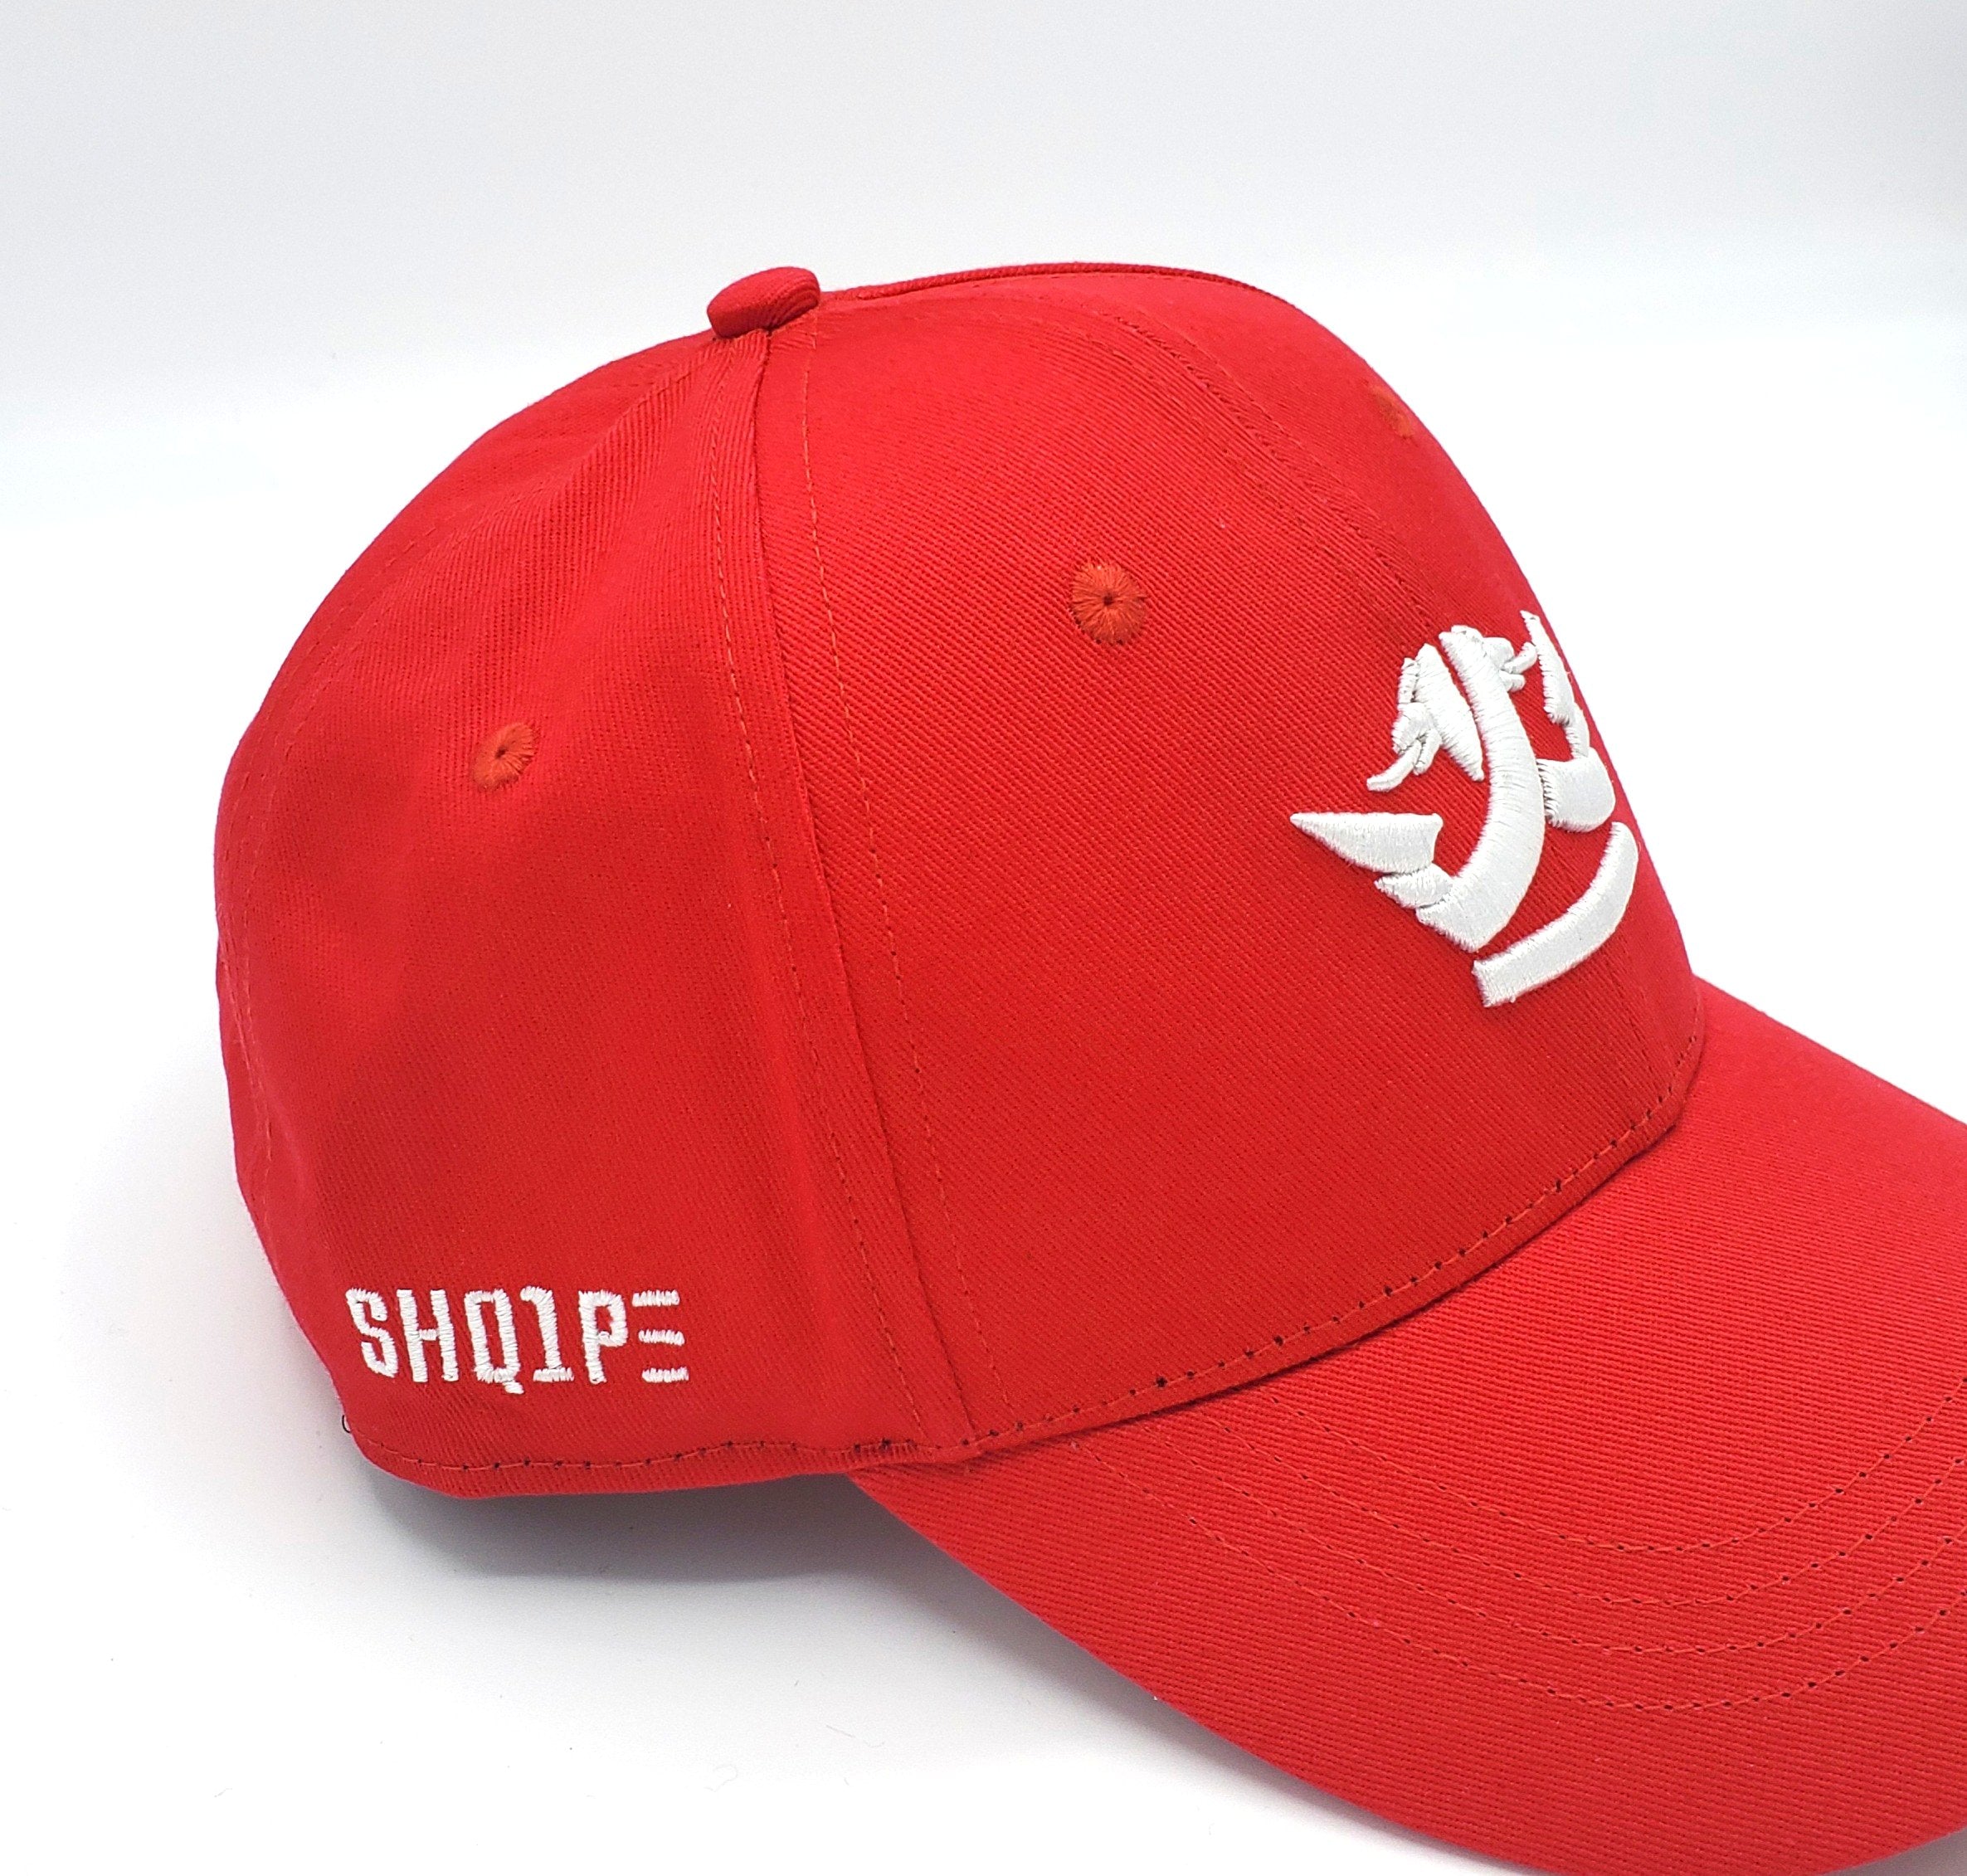 1st Edition Shq1pe Baseball Cap Red/White